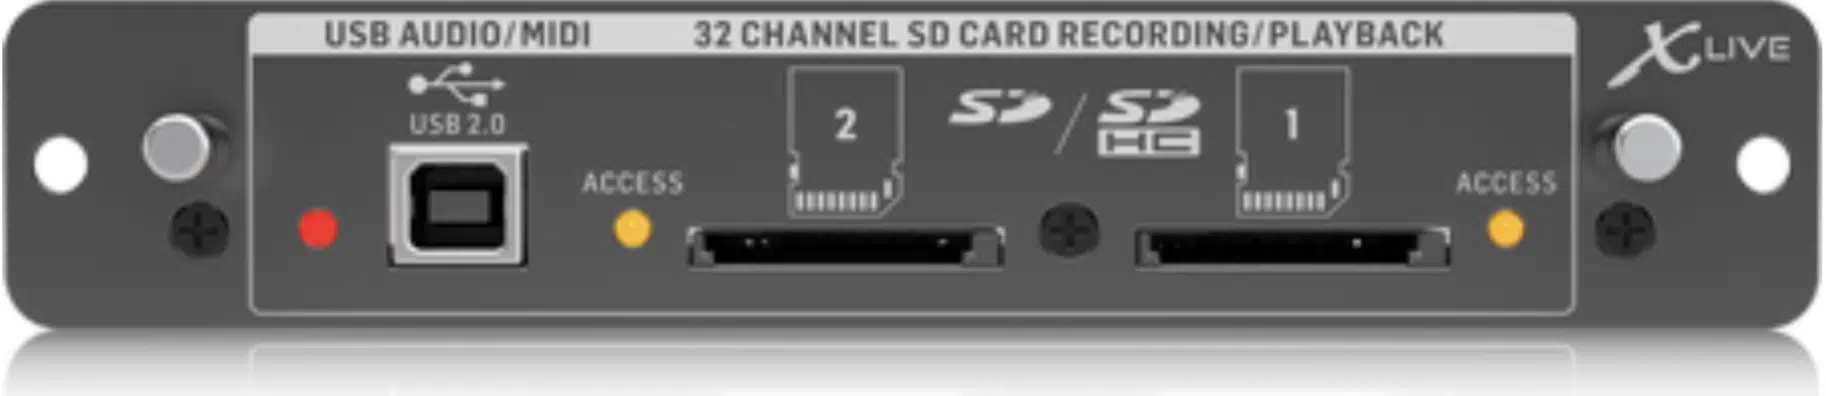 SD Card - Unison